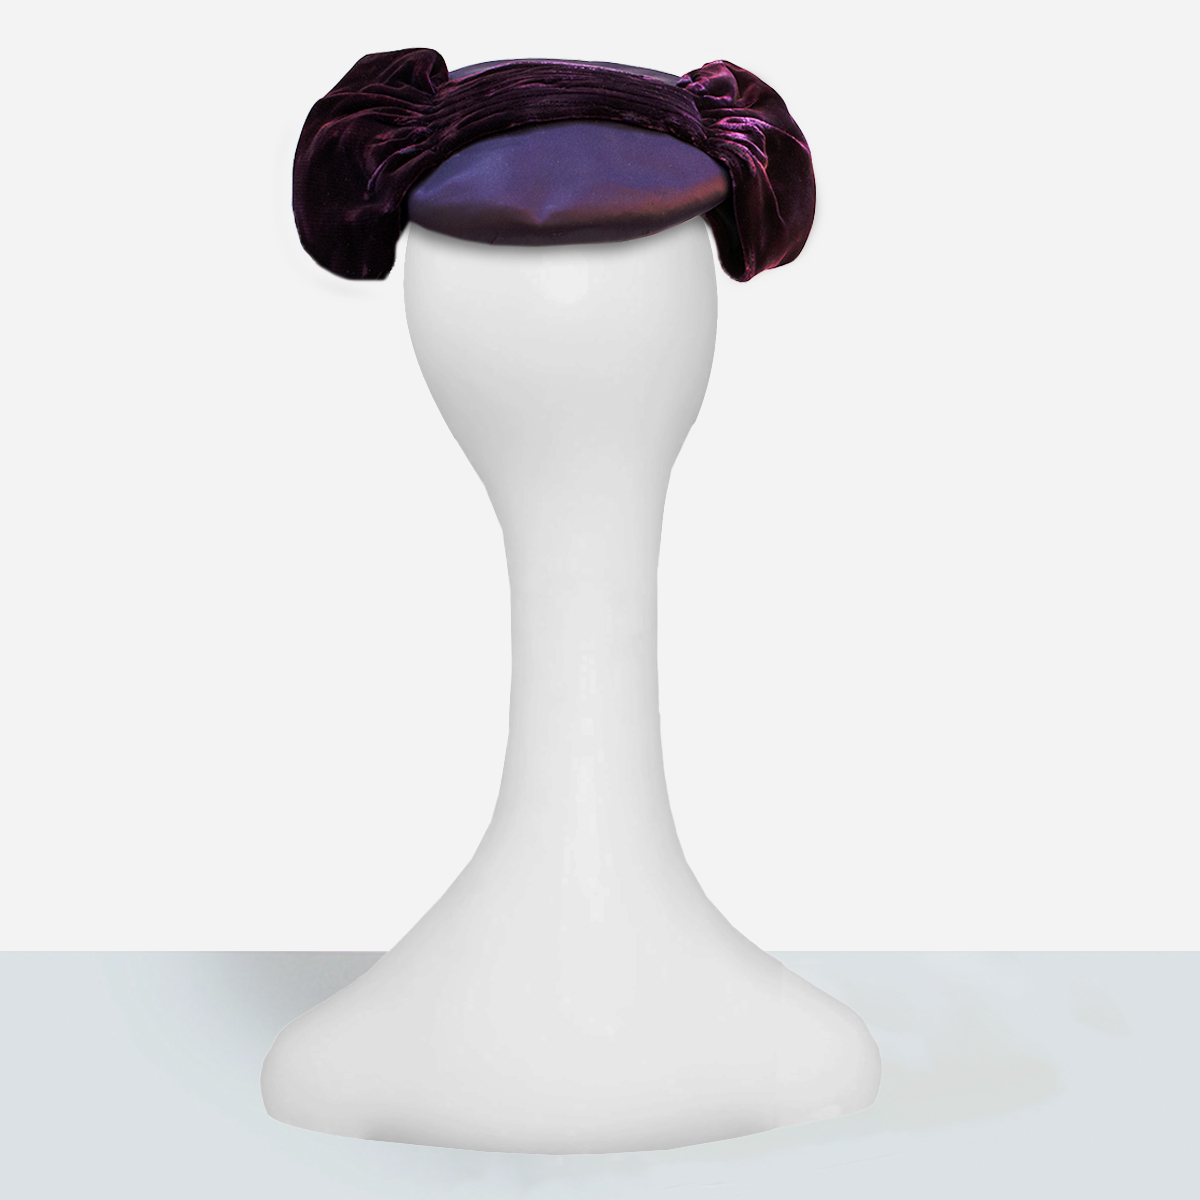 1950s purple hat